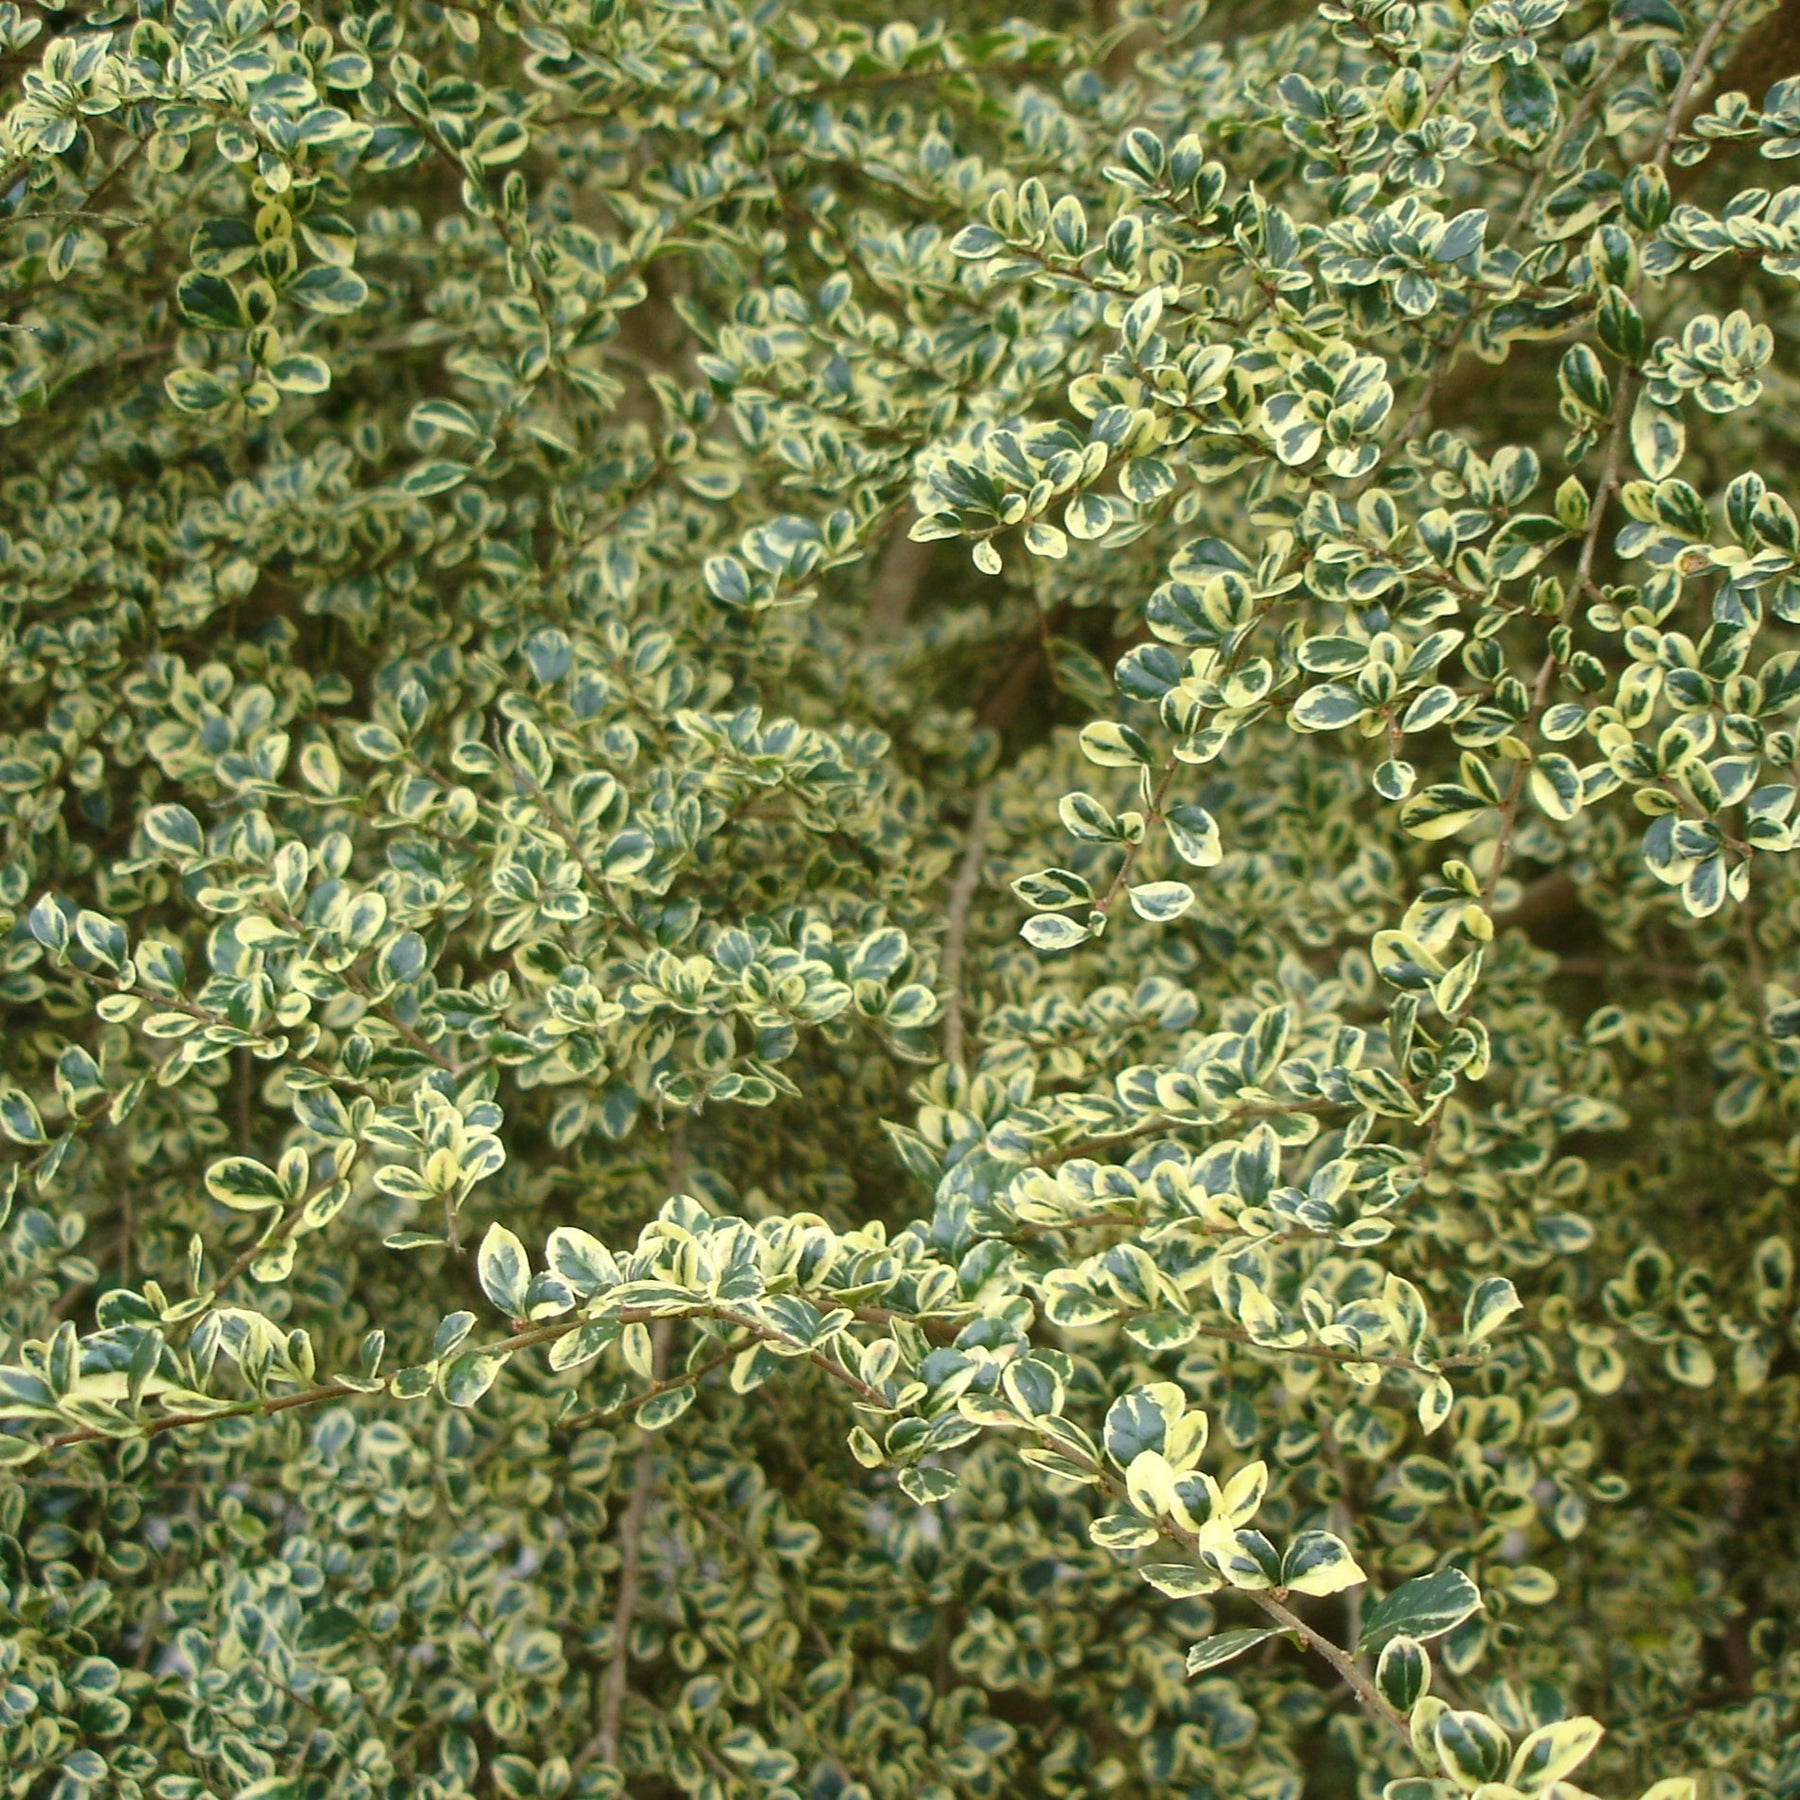 Azara Microphylla Variegata